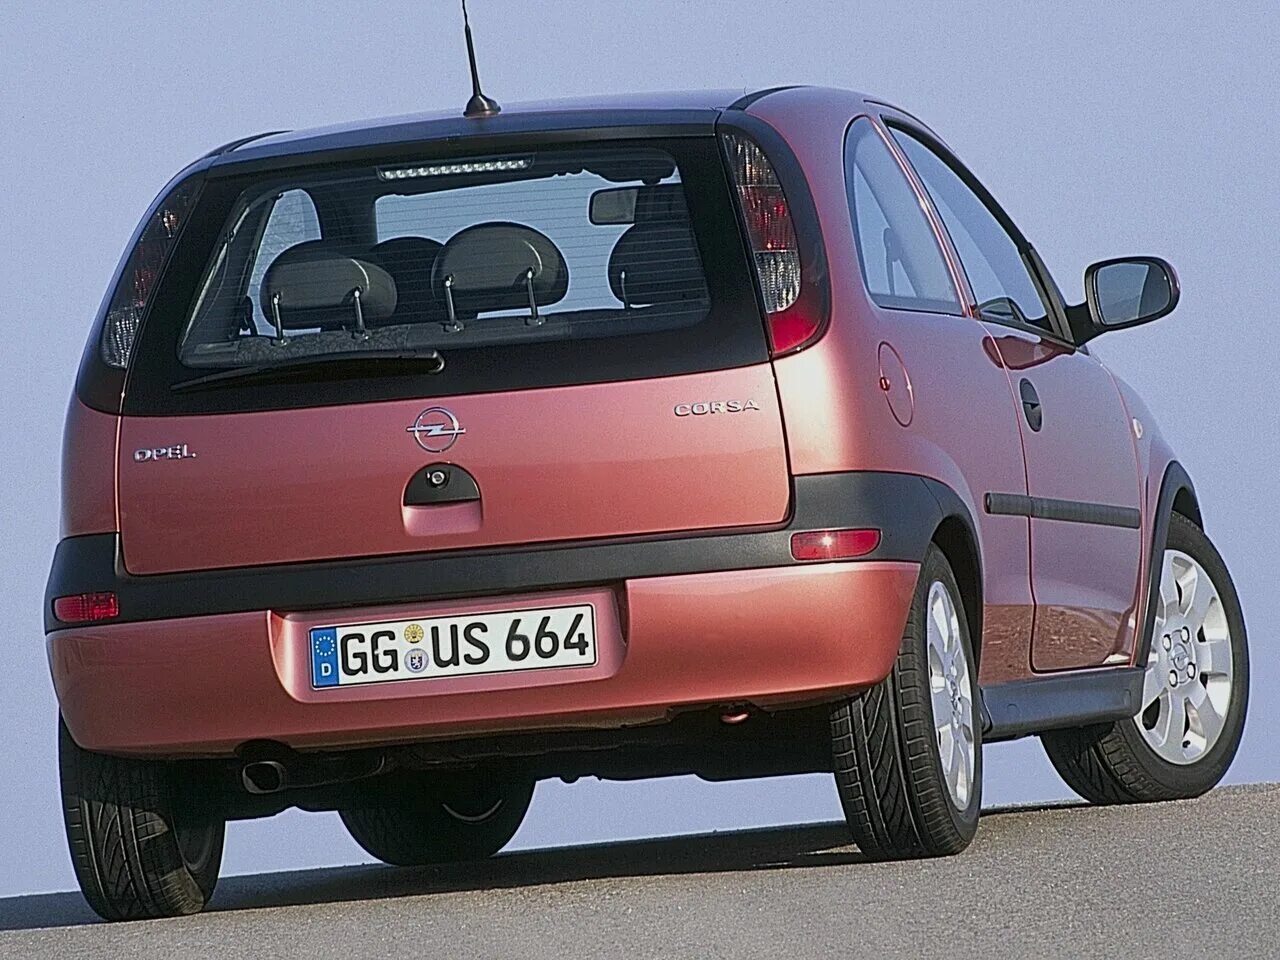 Opel Corsa c 2000. Opel Corsa c хэтчбек III 1.2. Opel Corsa 1.2 2000. Opel Corsa c 2001 1.2. Opel corsa 2003